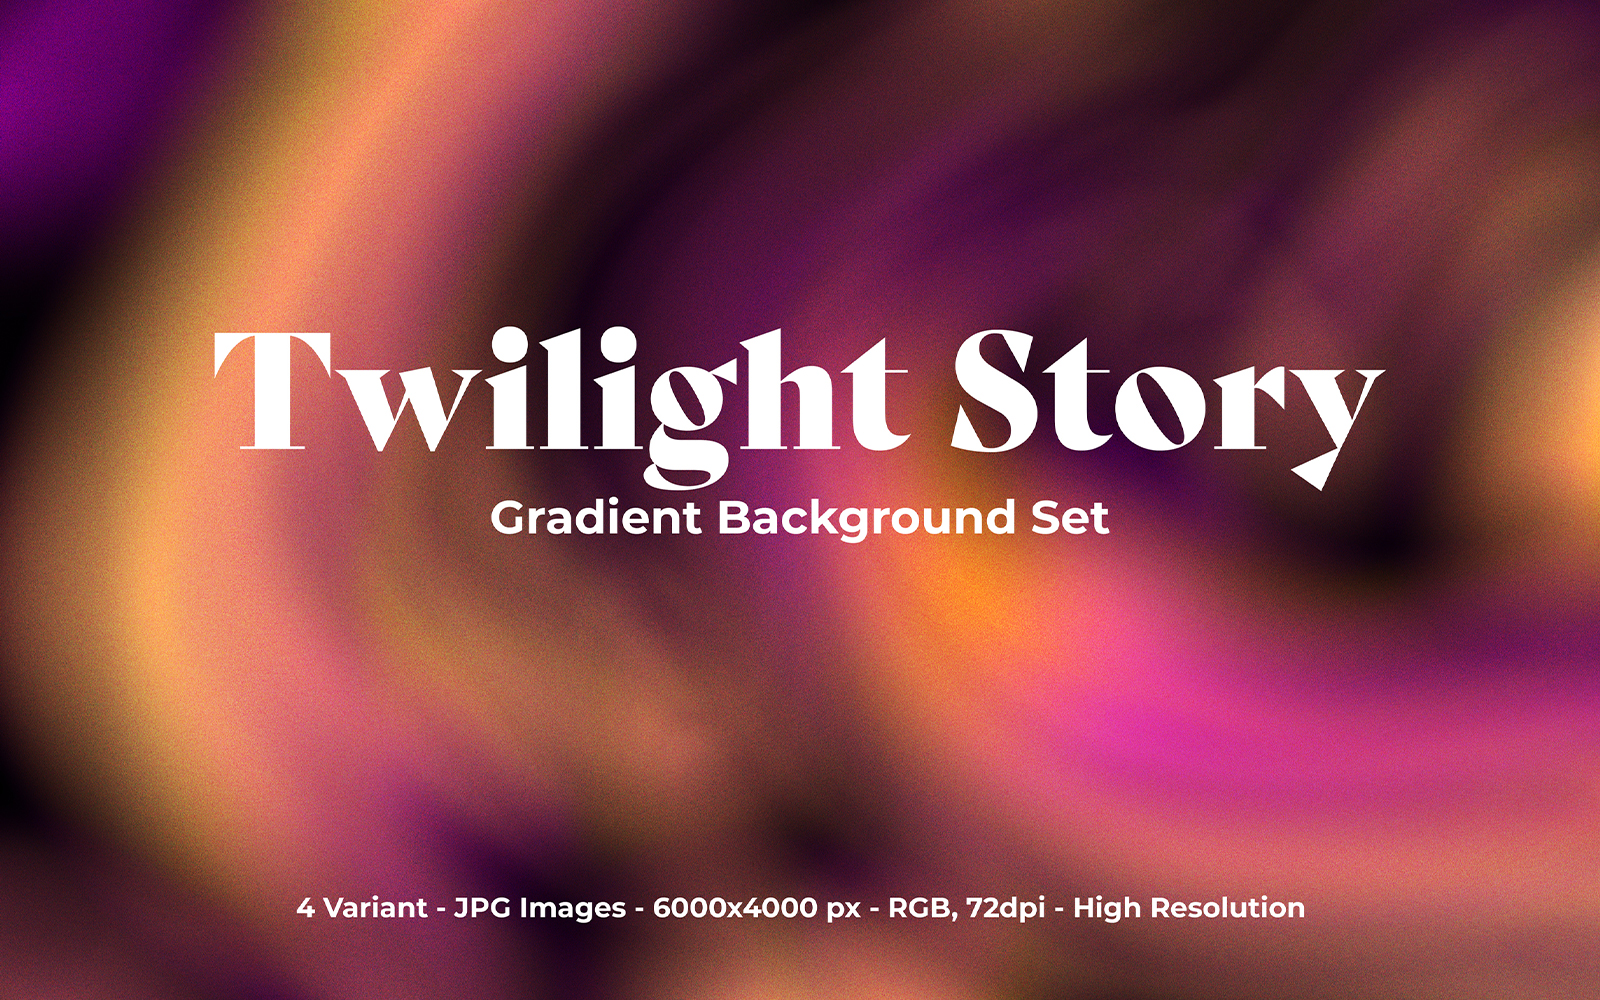 Twilight Story Gradient Background